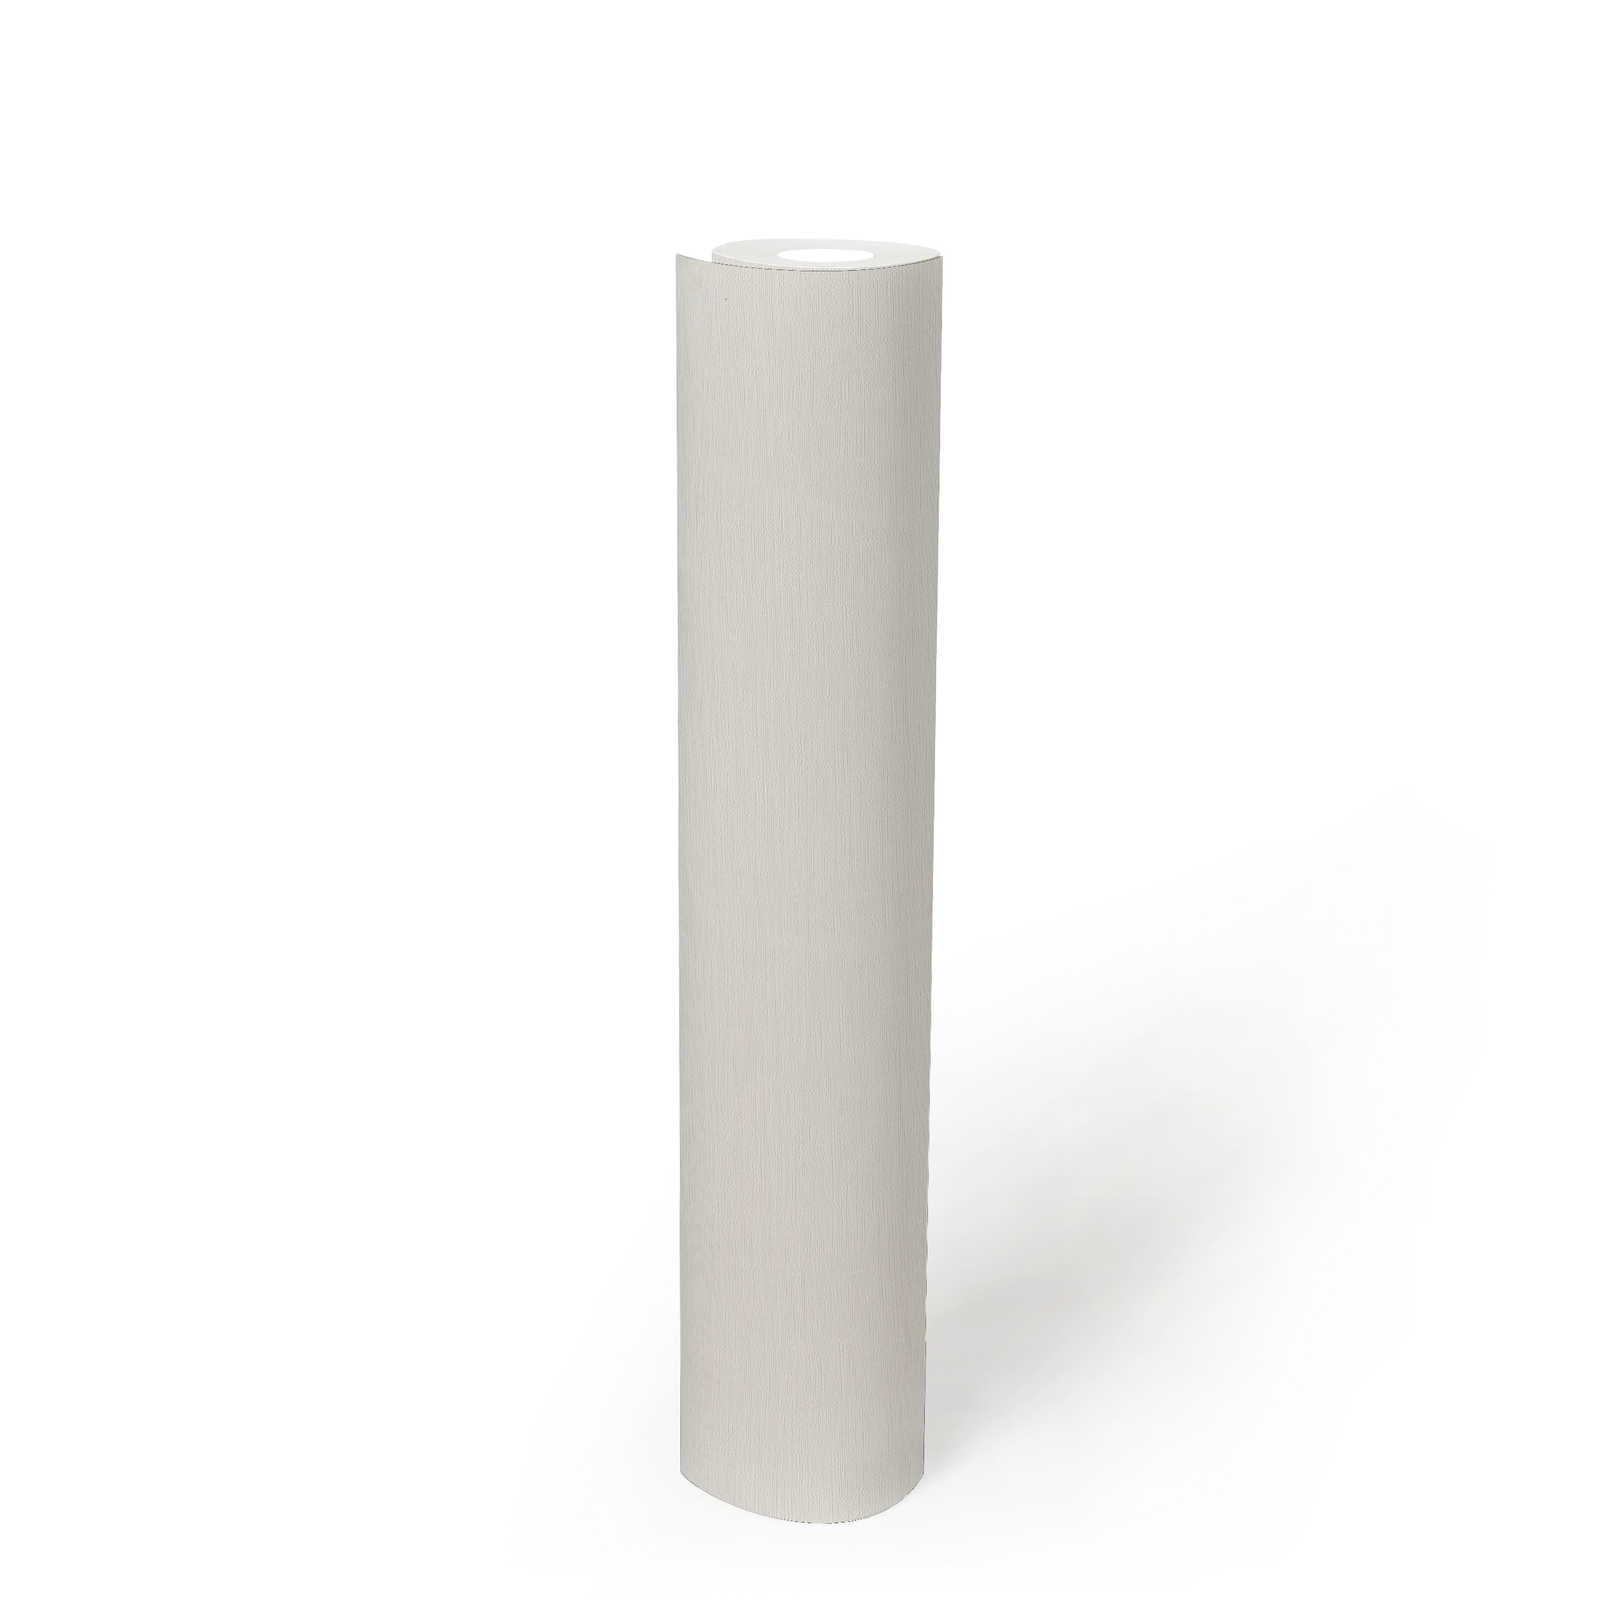             Papel pintado blanco mate con diseño de estructura en aspecto de yeso
        